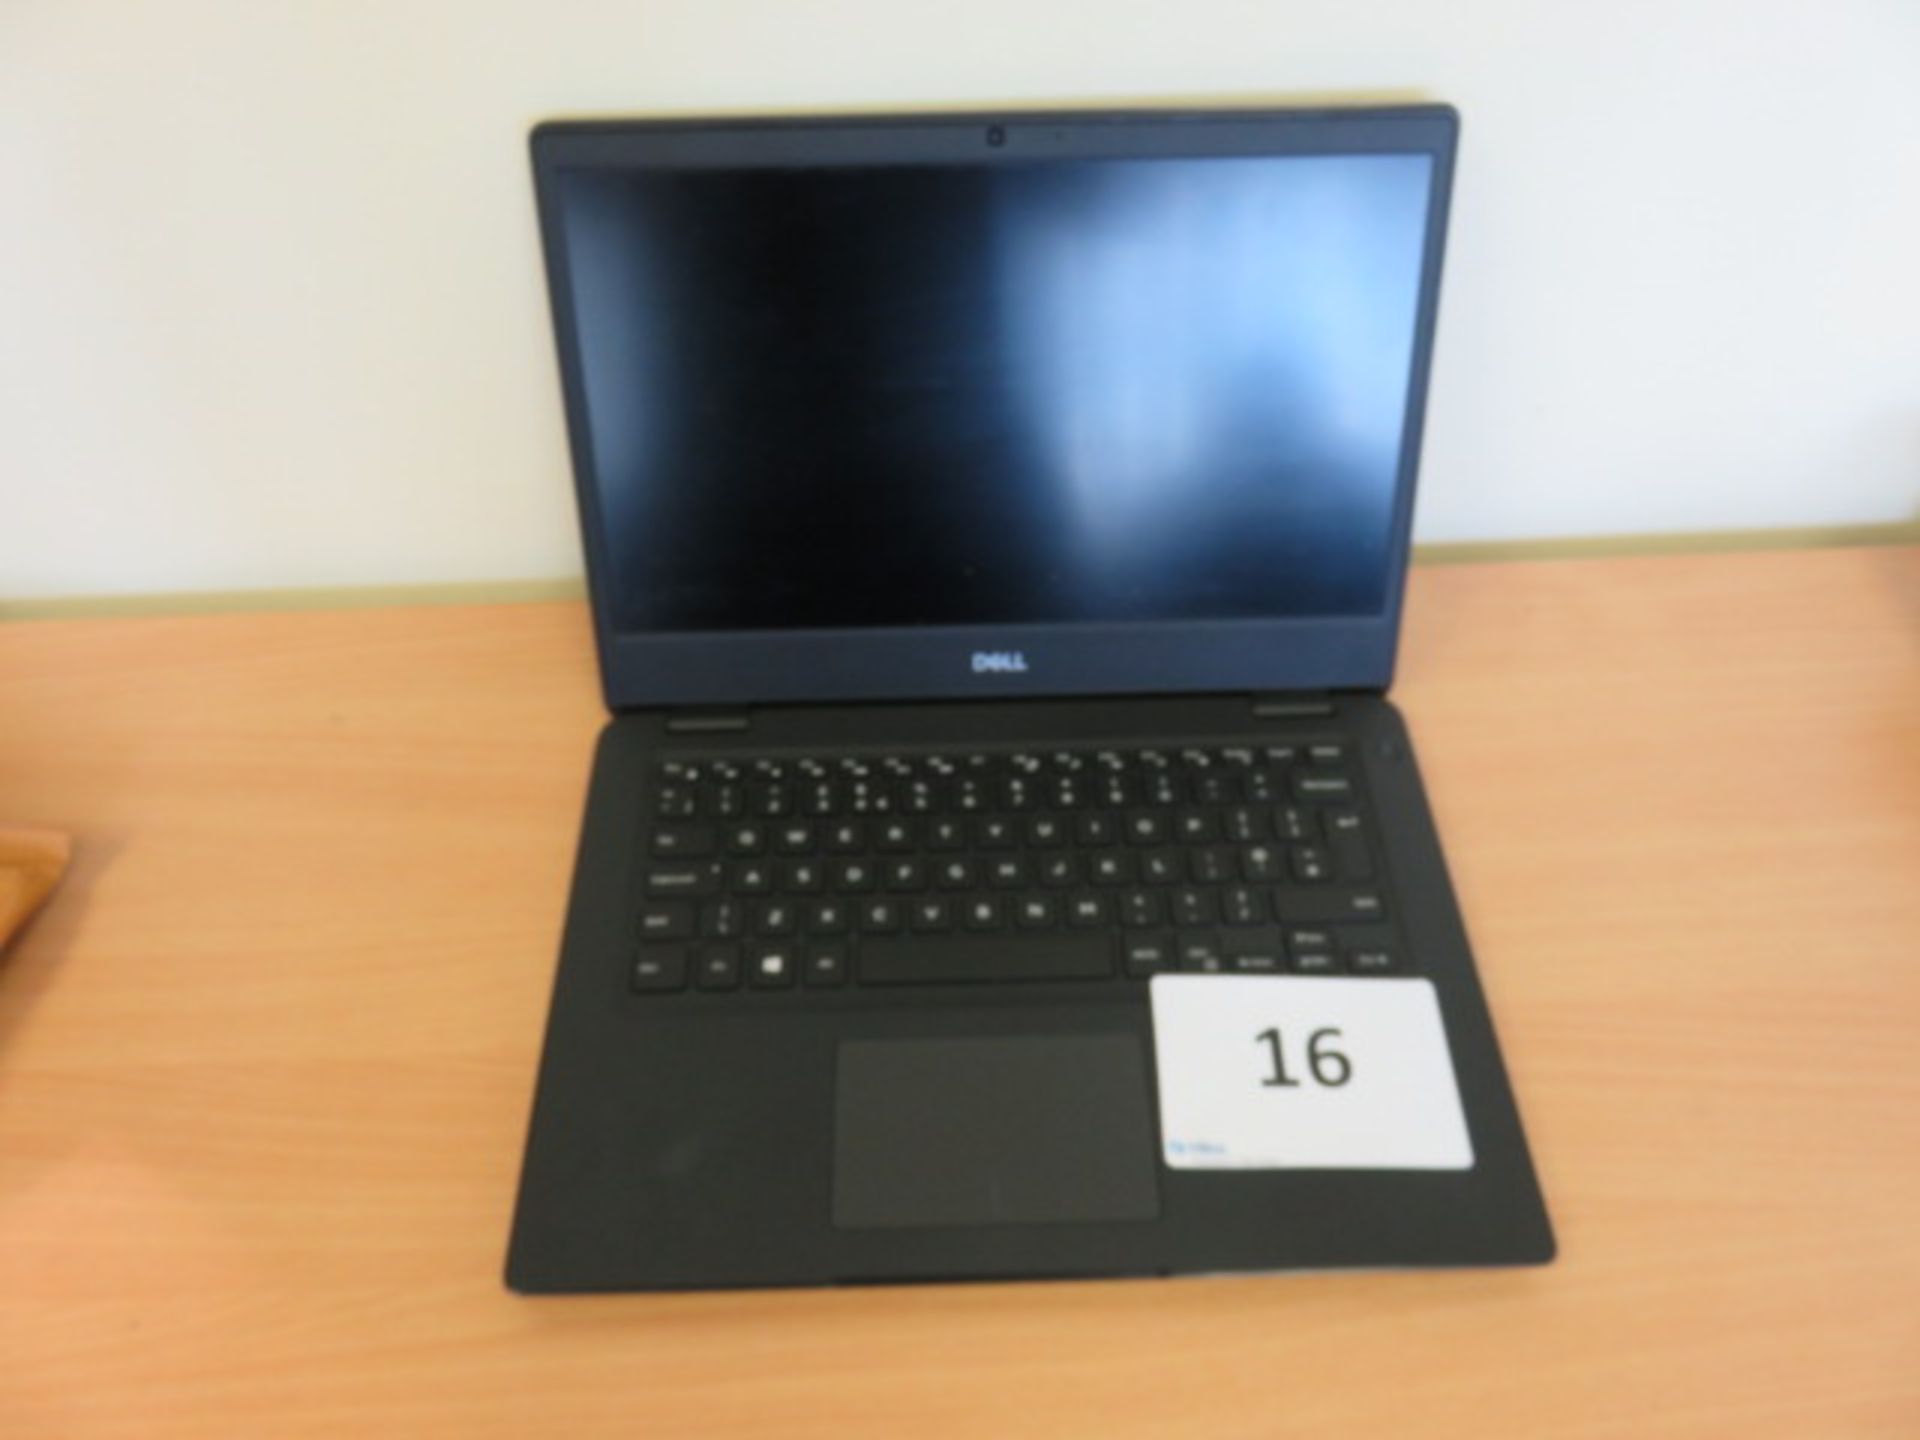 Dell Latitude 3400 14in Core i5 8th Gen Laptop Serial No. 5WP1FT2 (2019) (Asset No. LTW-436) (Crack